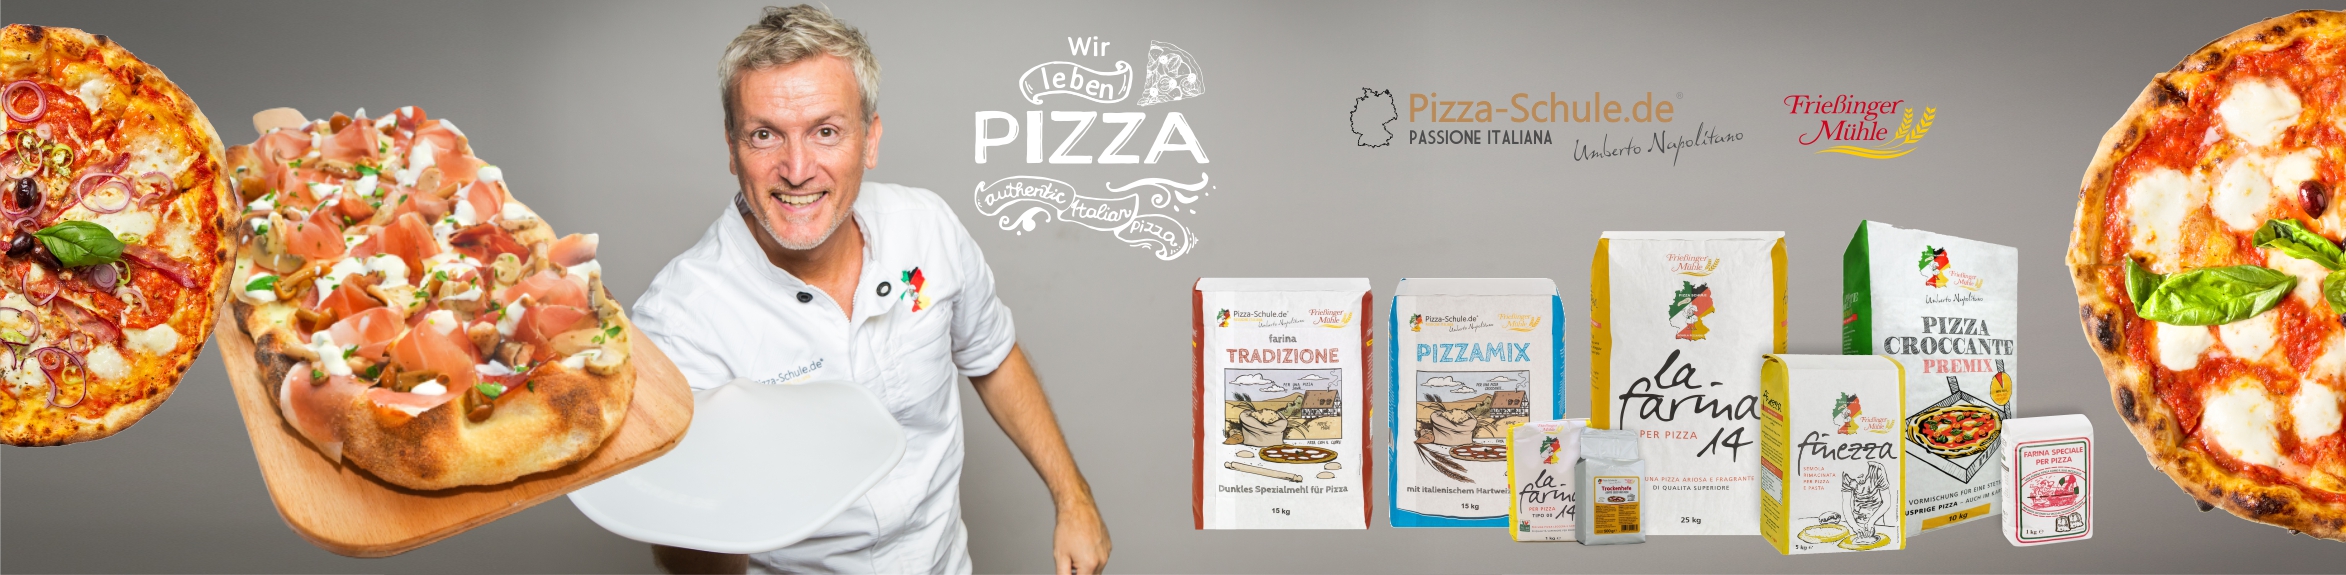 Pizzeria-Produktlinie Pizza-Schule – Umberto Napolitano